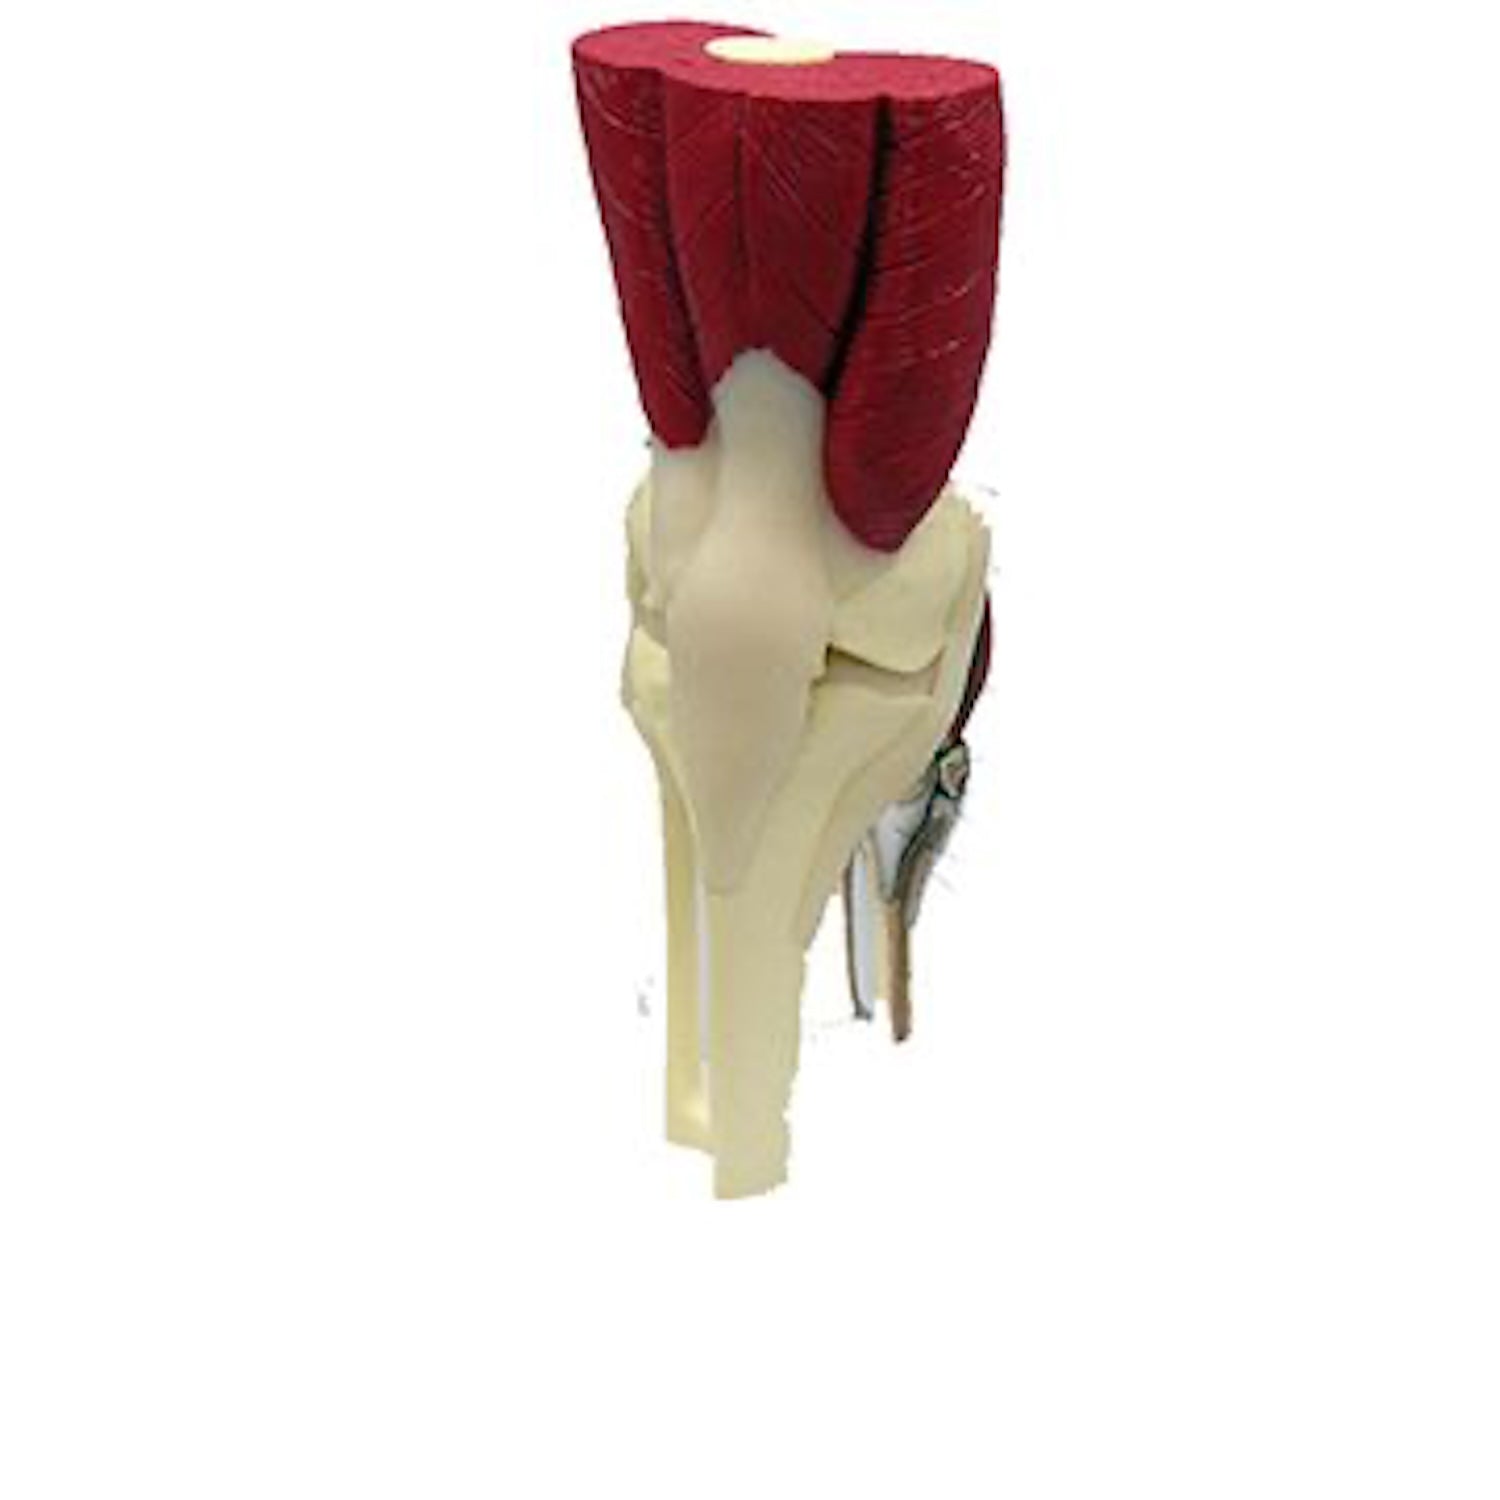 Knee Joint - Budget Full Size Model